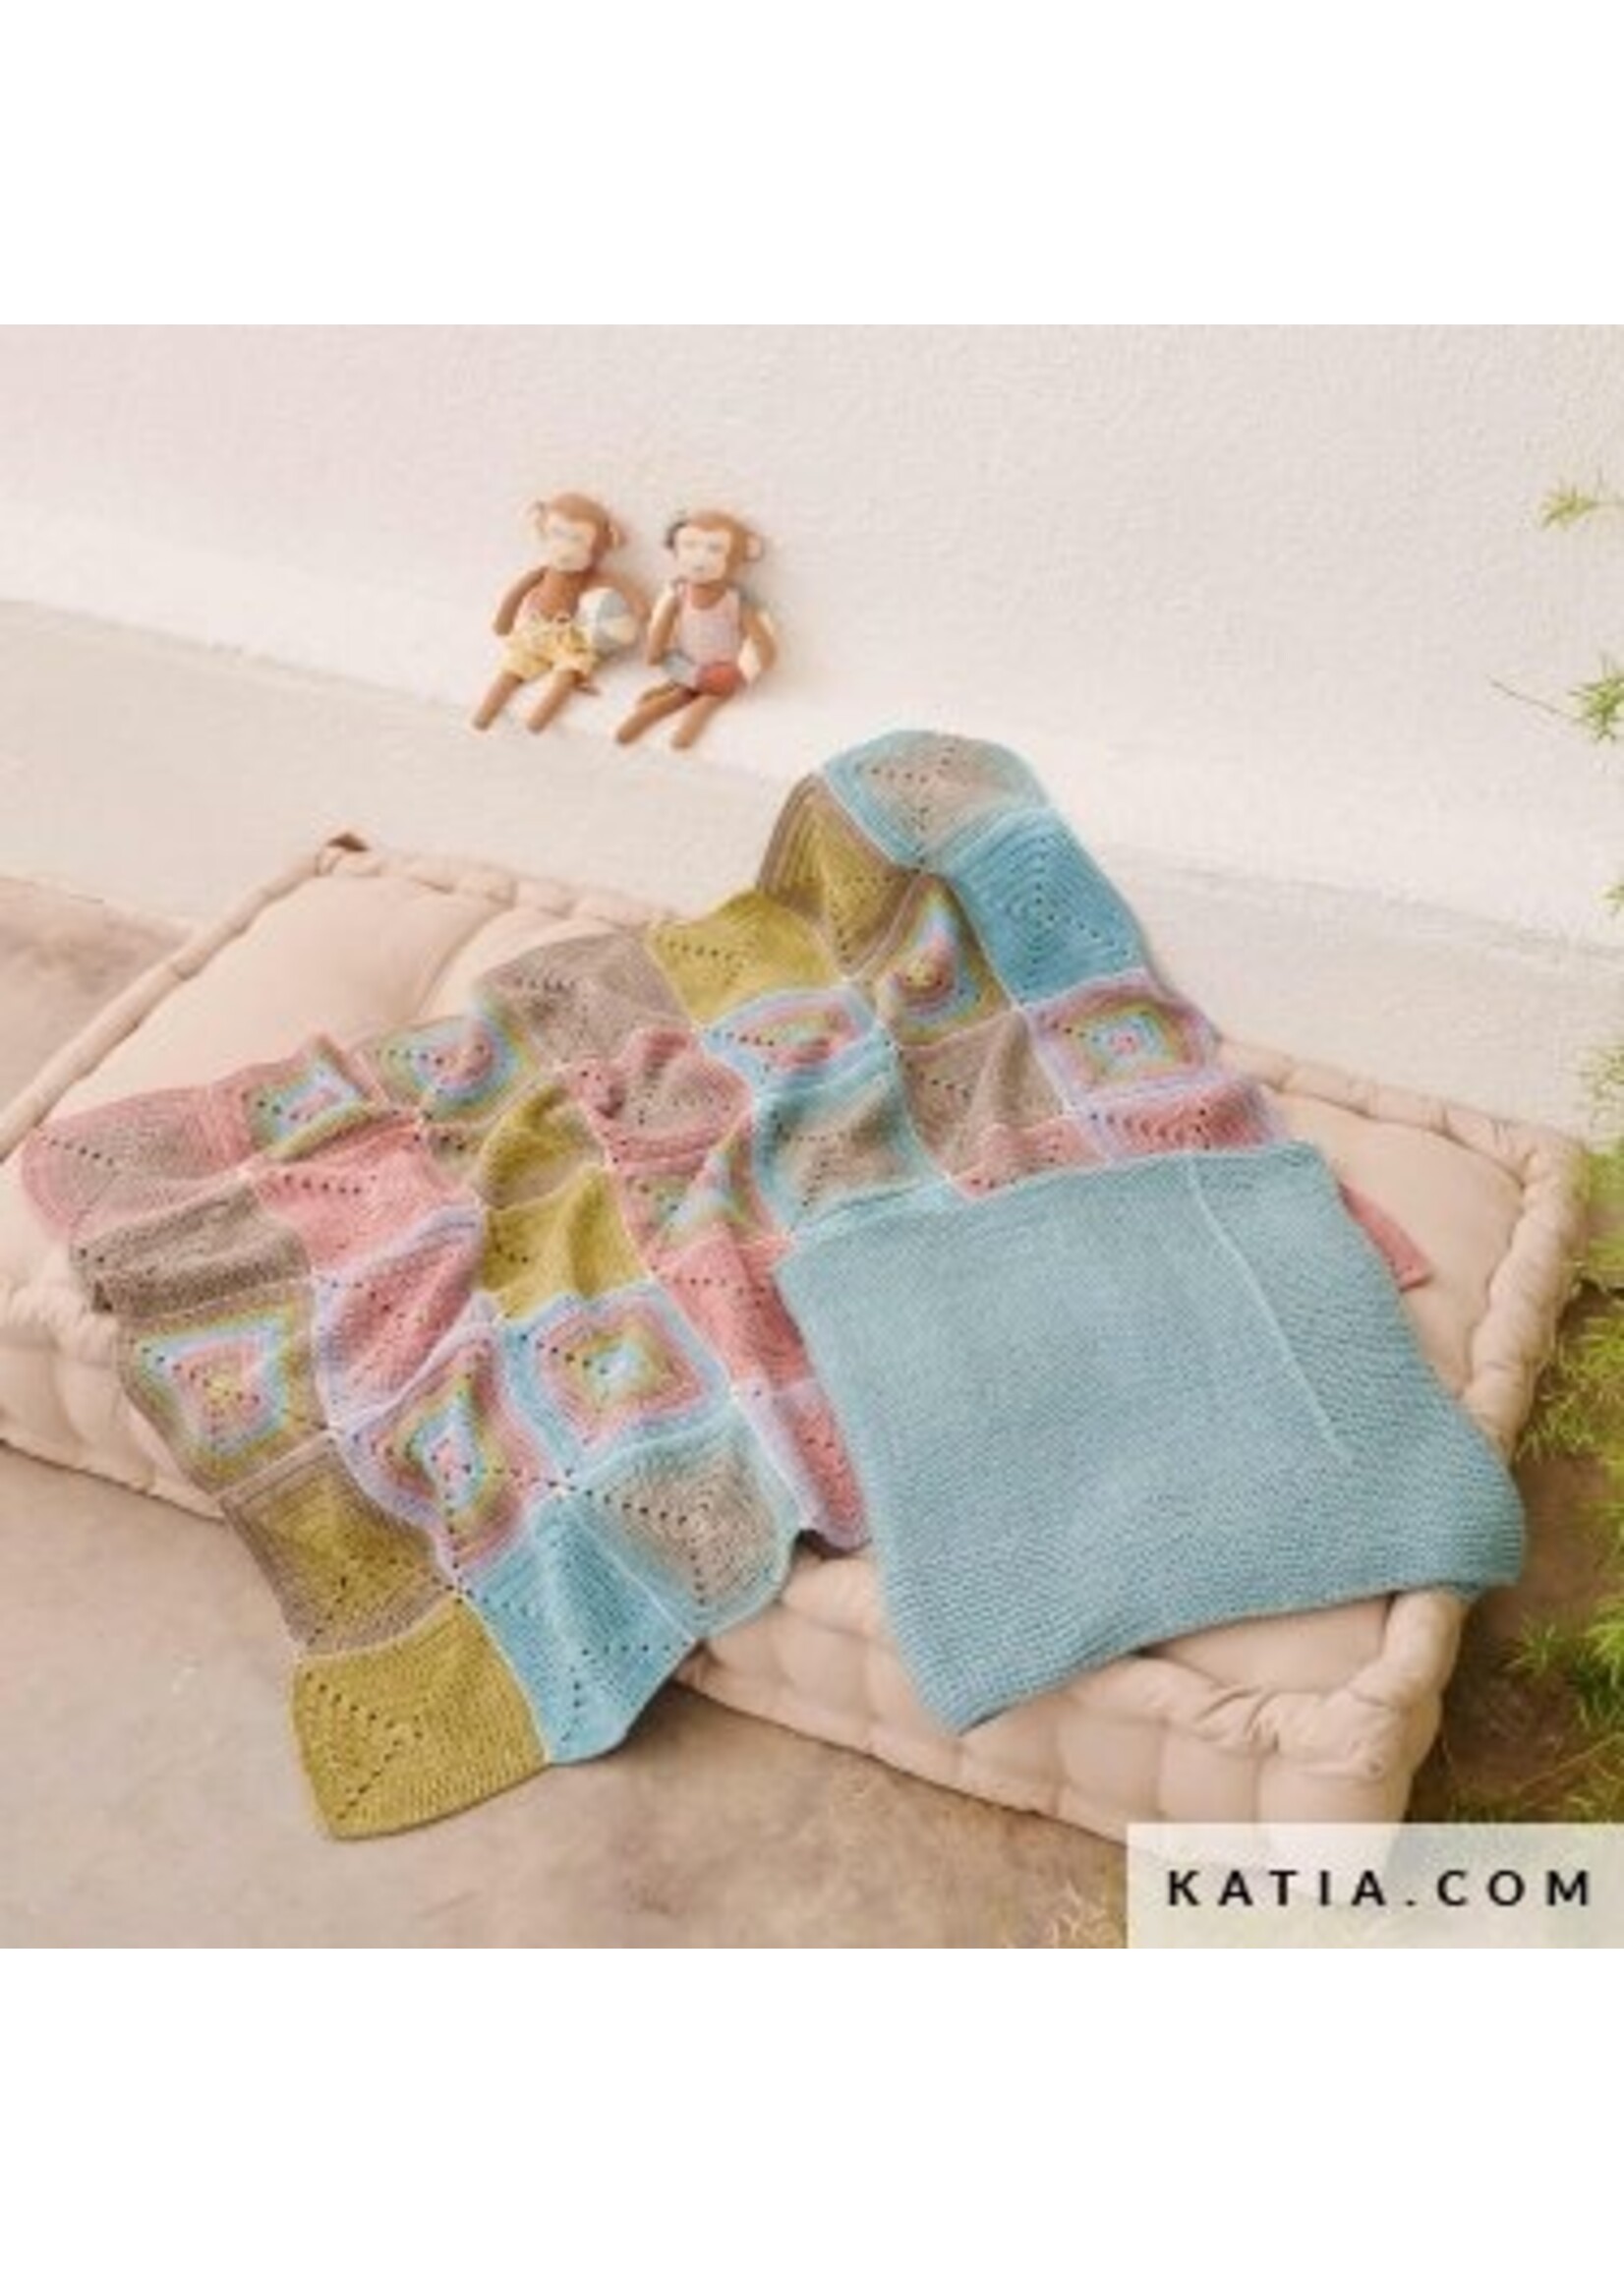 Katia Fair cotton Granny